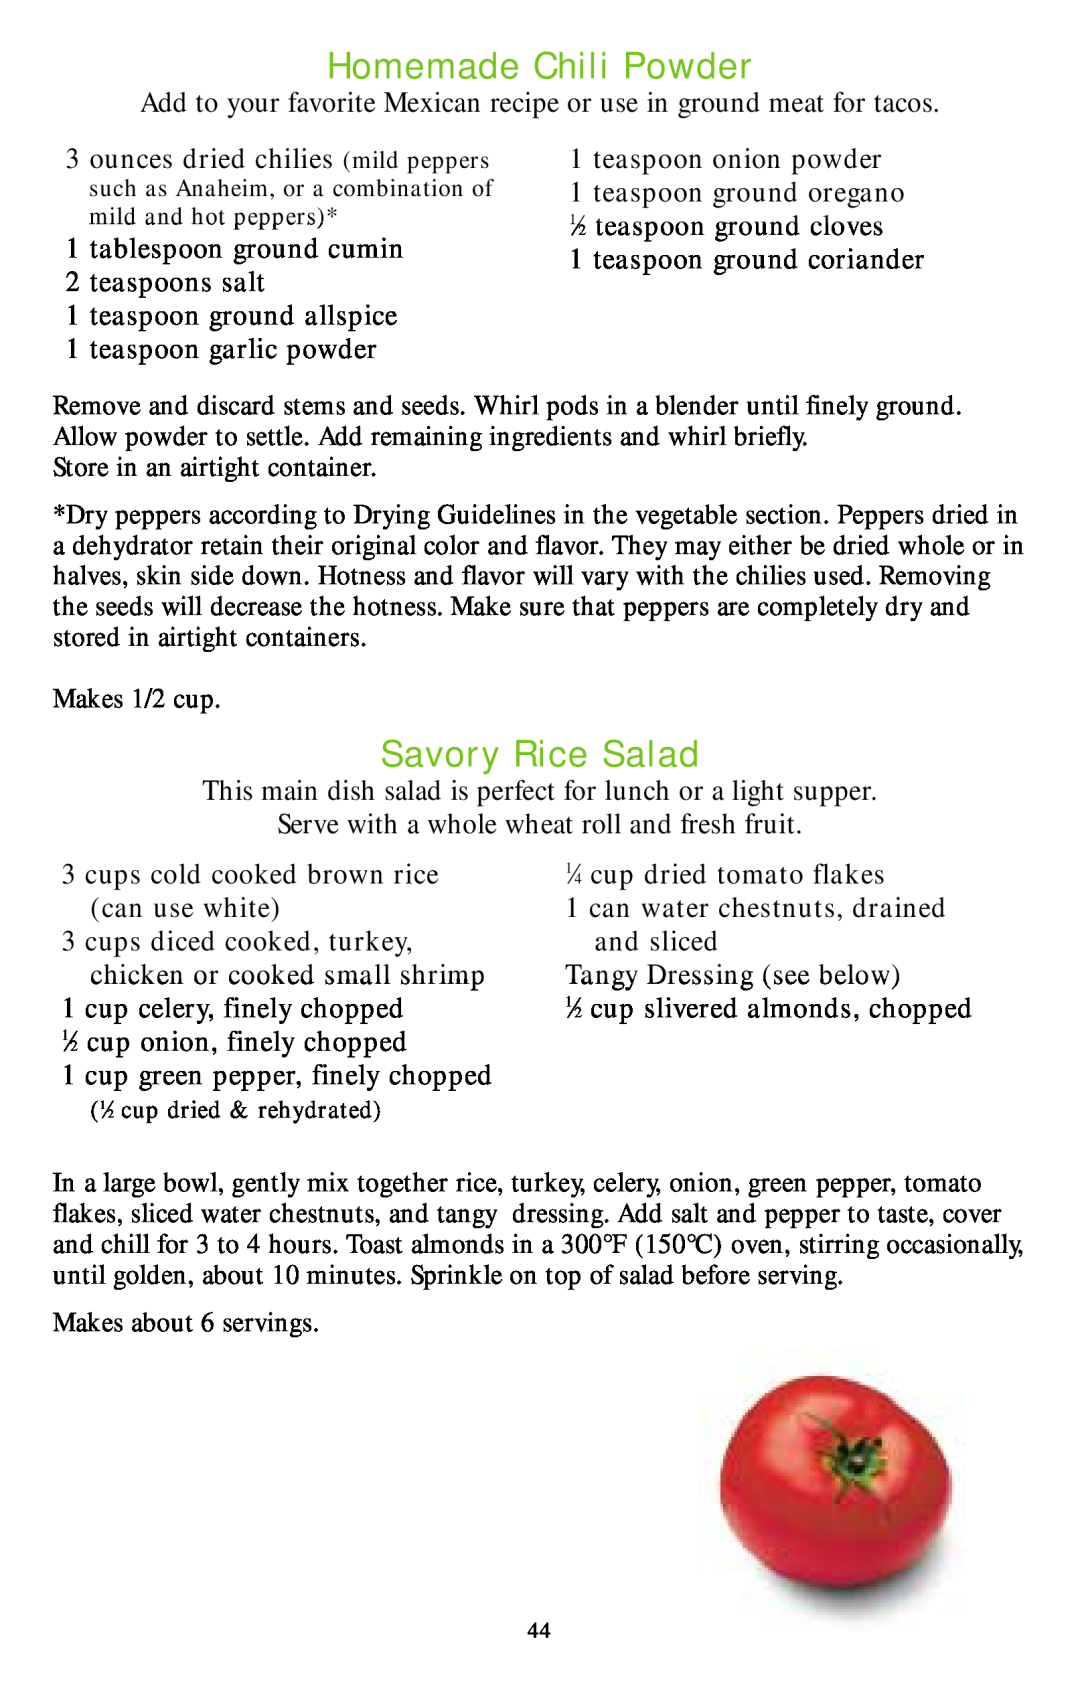 Nesco Food Dehydrator manual Homemade Chili Powder, Savory Rice Salad 